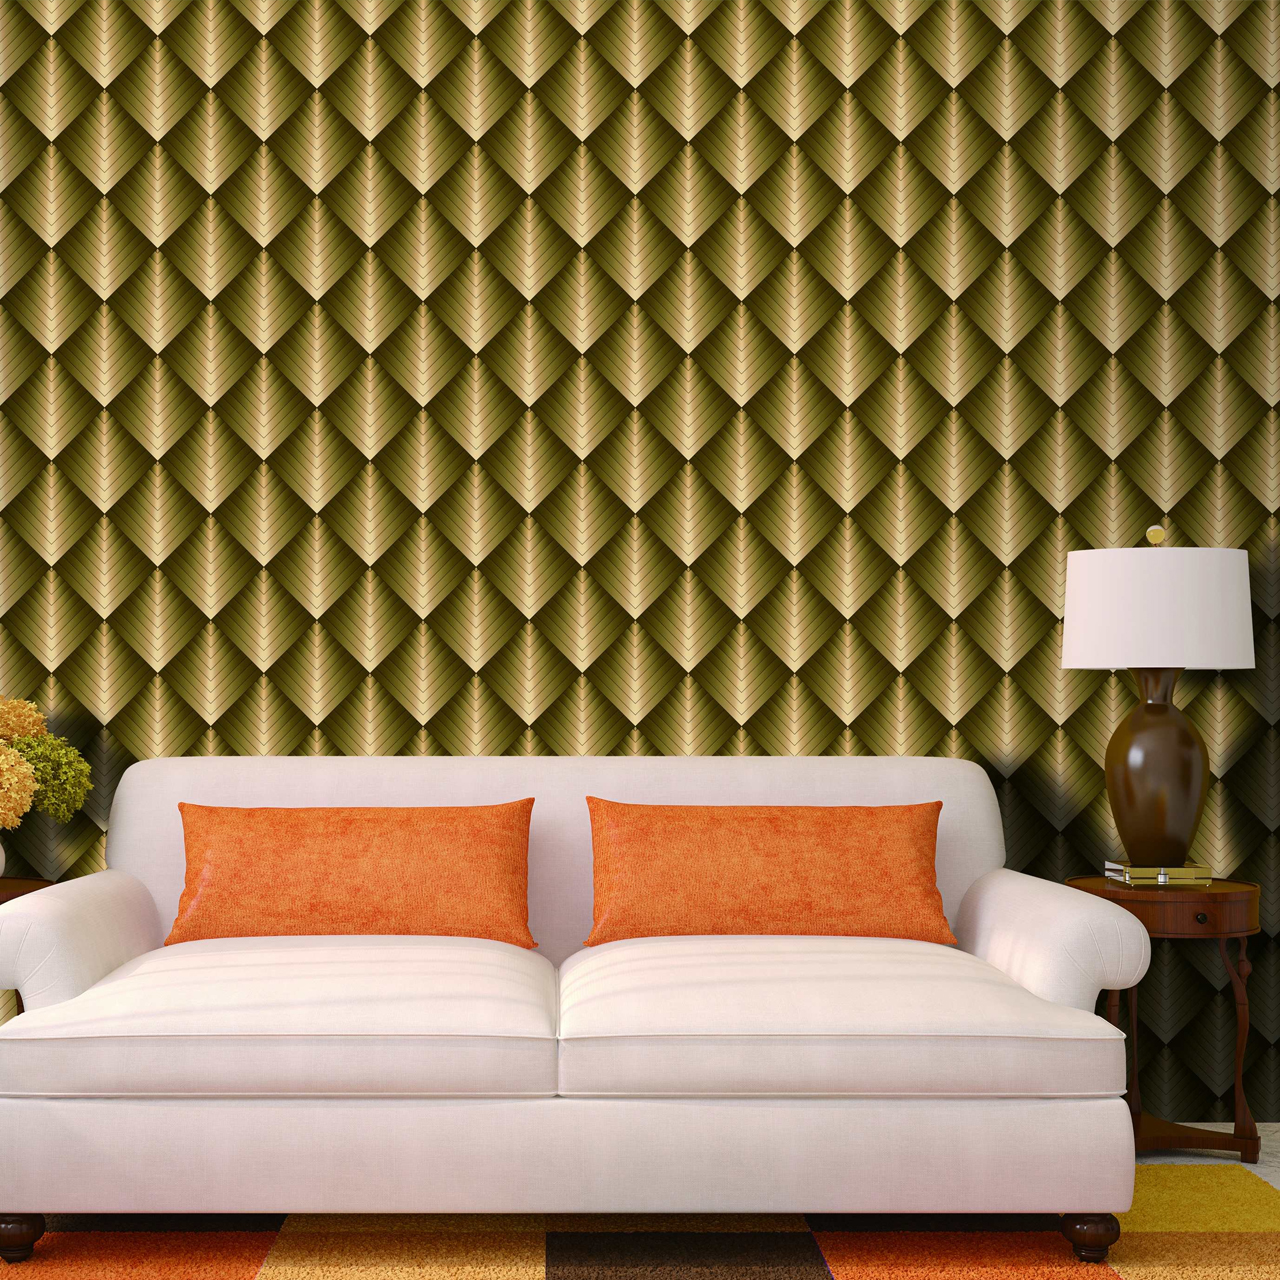 wallpaper for bedroom walls india,wall,wallpaper,orange,interior design,room